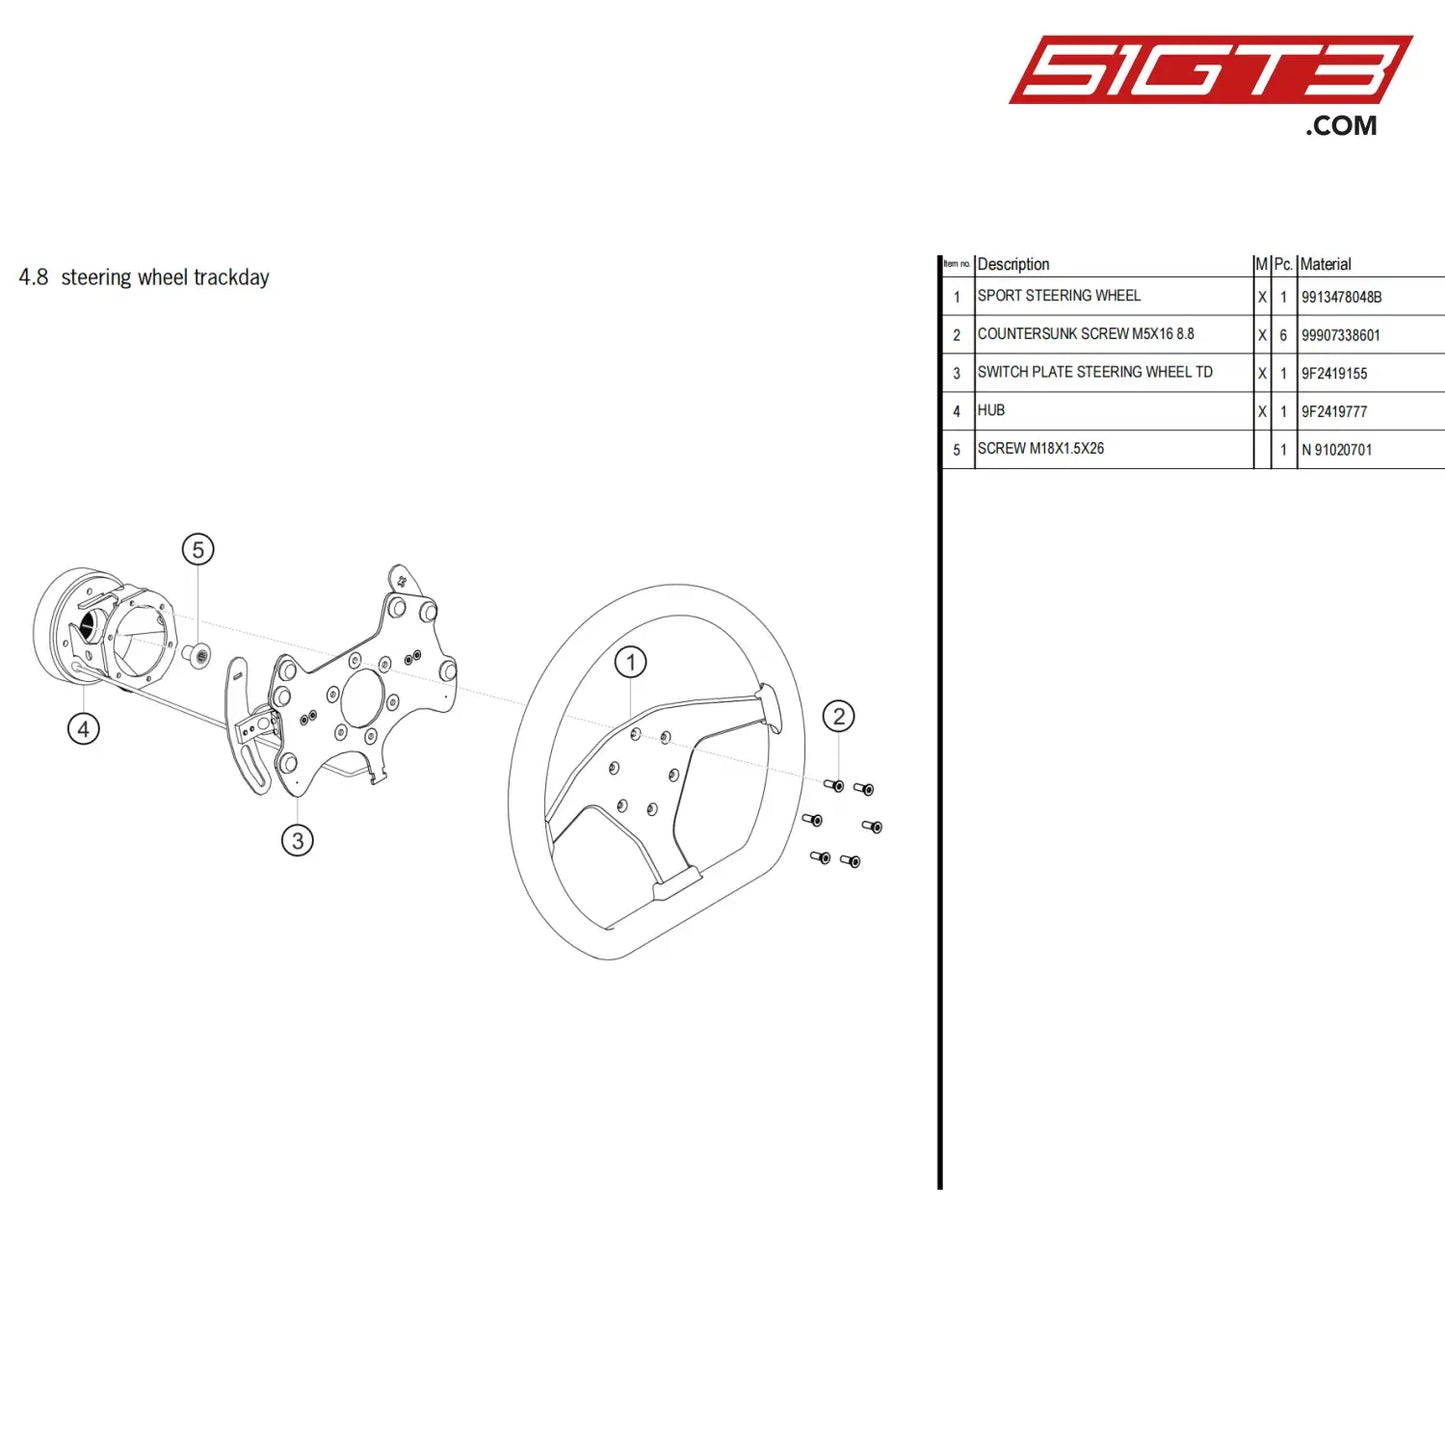 Switch Plate Steering Wheel Td - 9F2419155 [Porsche 718 Cayman Gt4 Clubsport] Steering Wheel